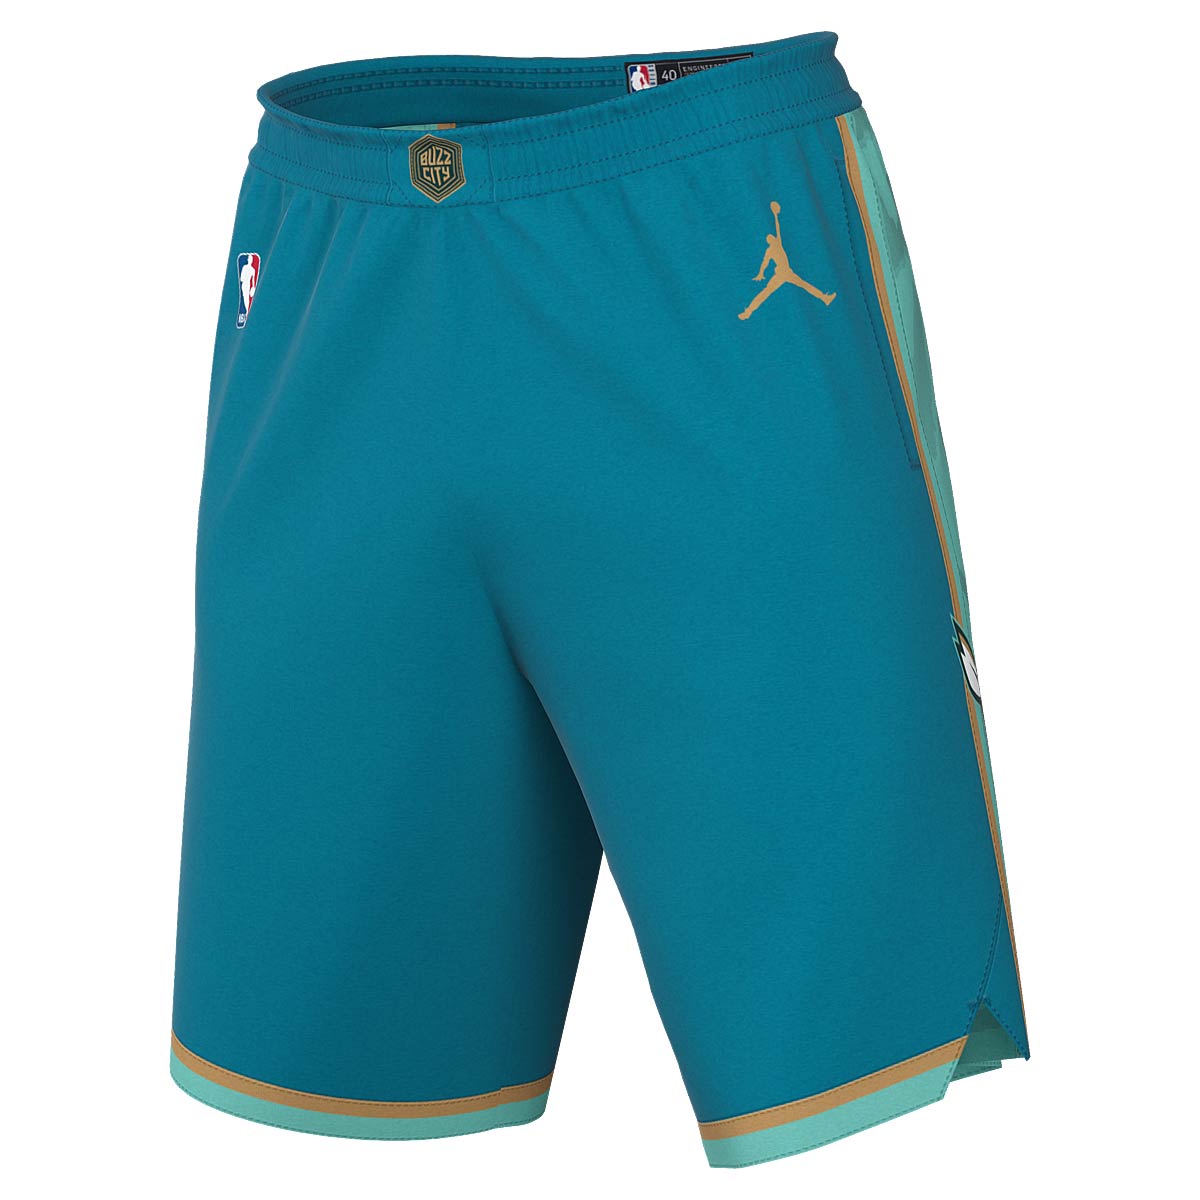 Jordan NBA Charlotte Hornets City Edition Swingman Shorts, Rapid Teal/schwarz/schwarz 3XL